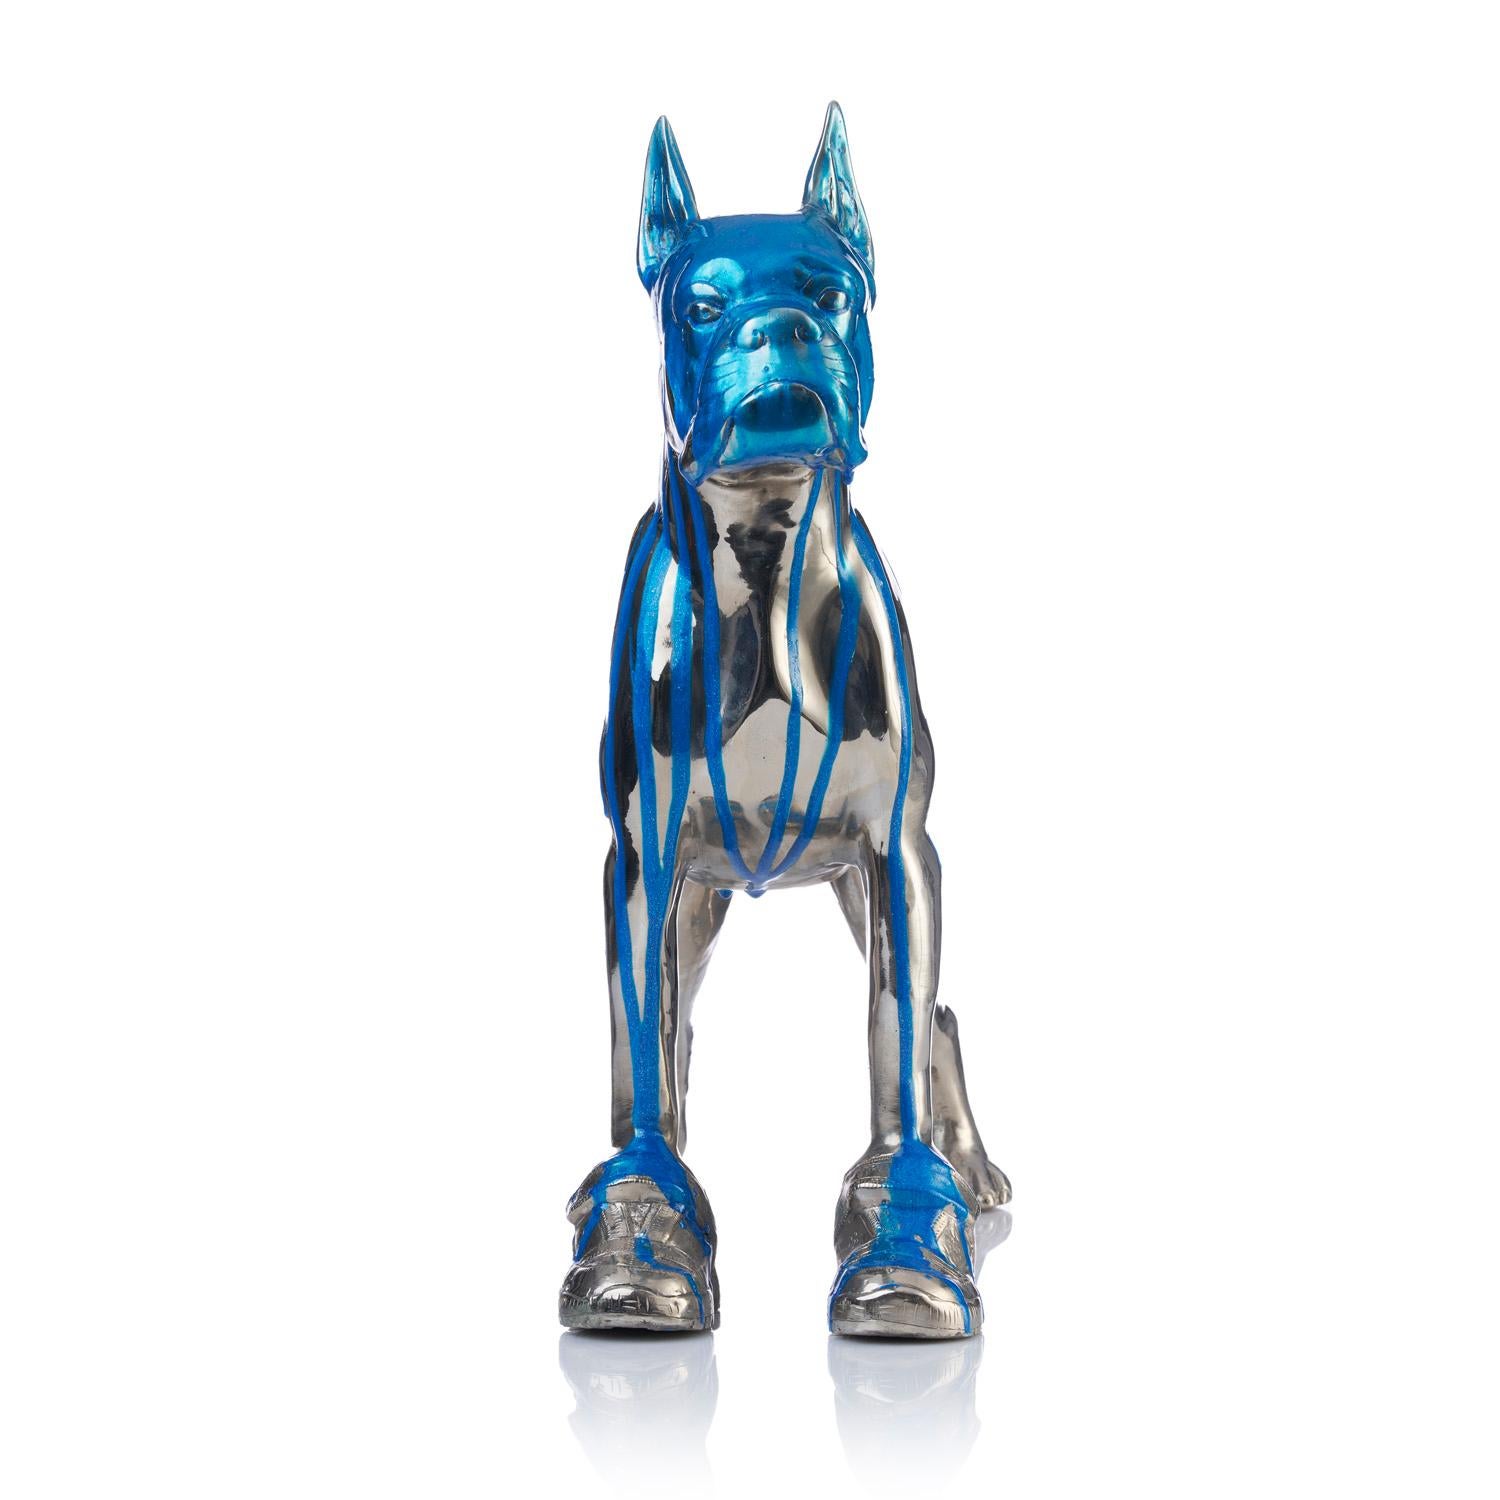 Cloned Bulldog with pet bottle (blue metallic) - Pop Art Sculpture by William Sweetlove